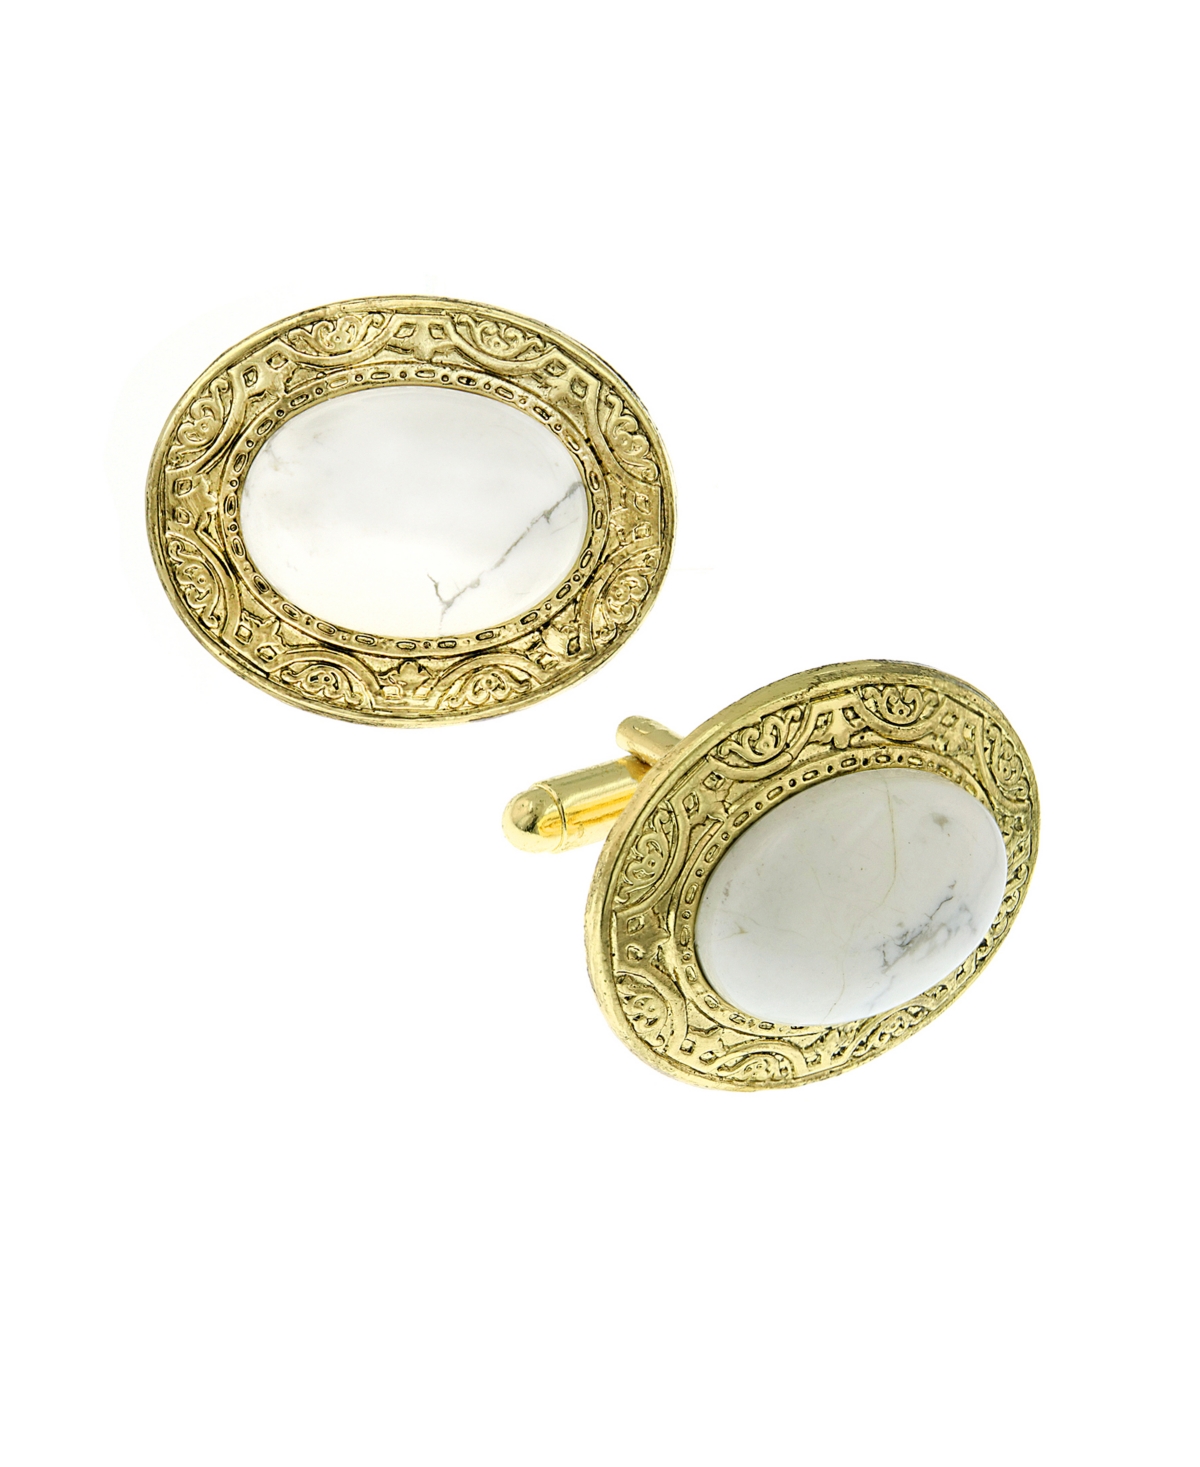 1928 Jewelry 14k Gold Plated Semi-precious Howlite Oval Cufflinks In White